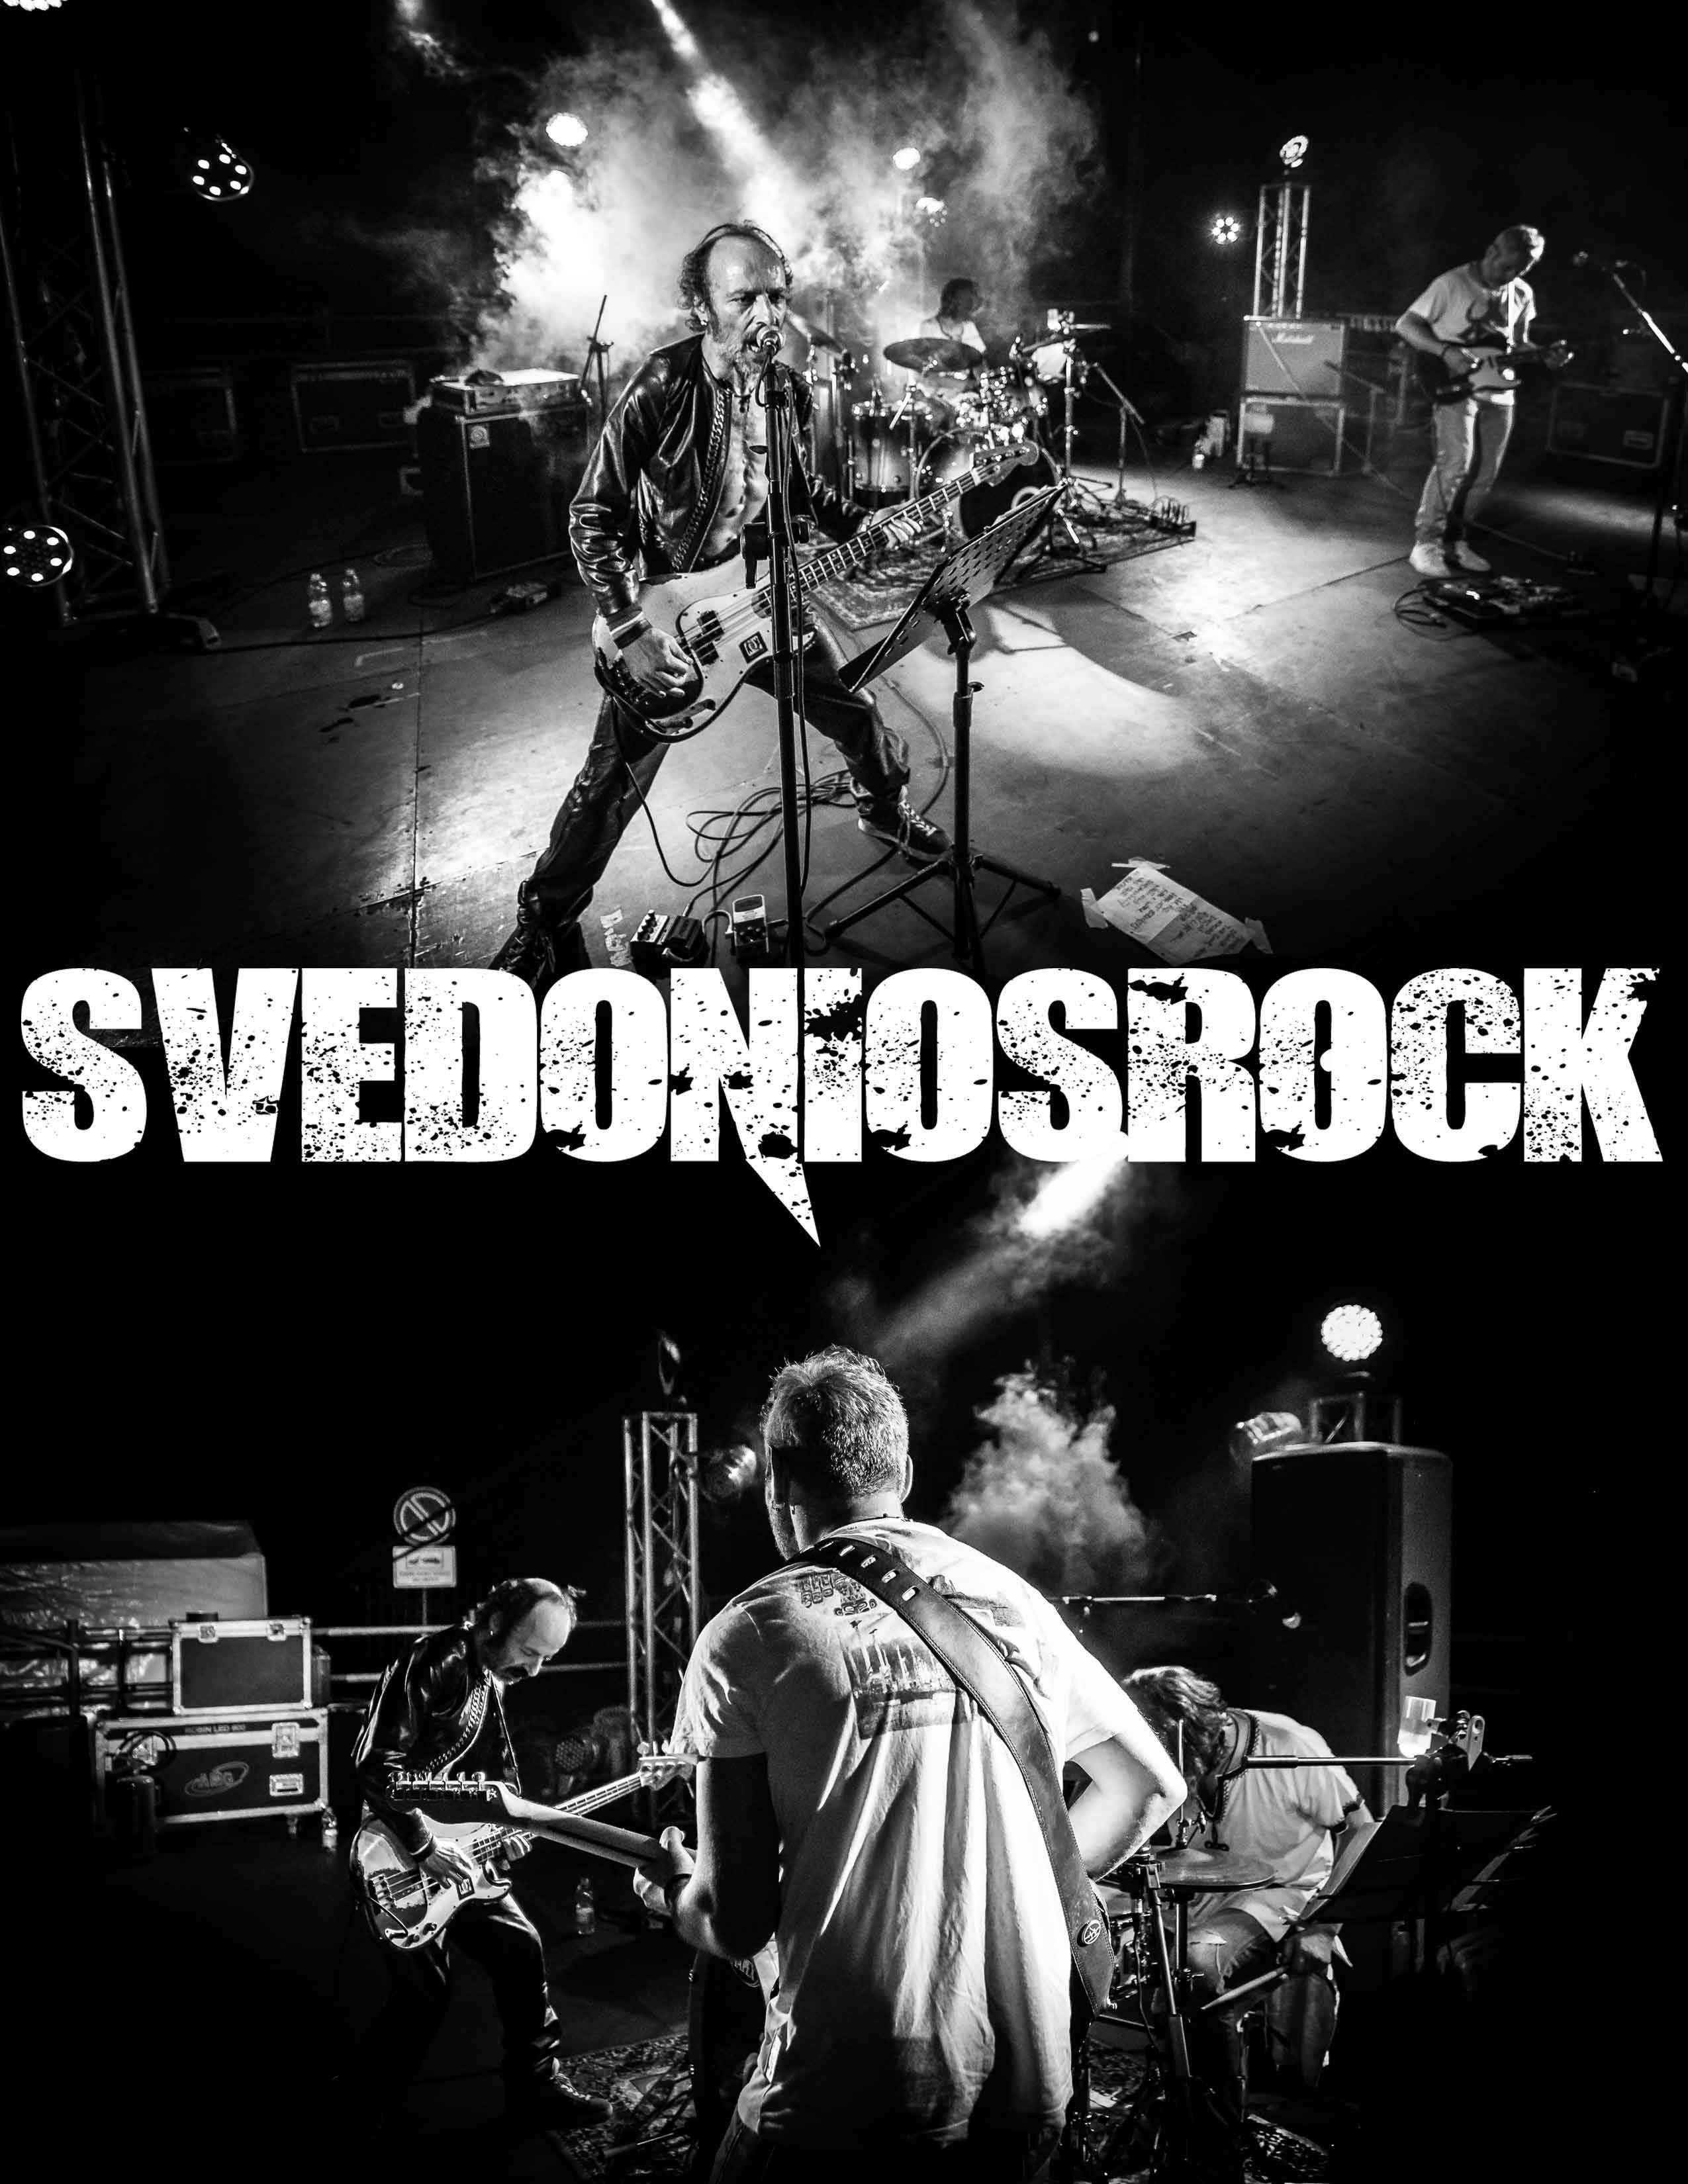 svedoniosrock trio rock Orvieto